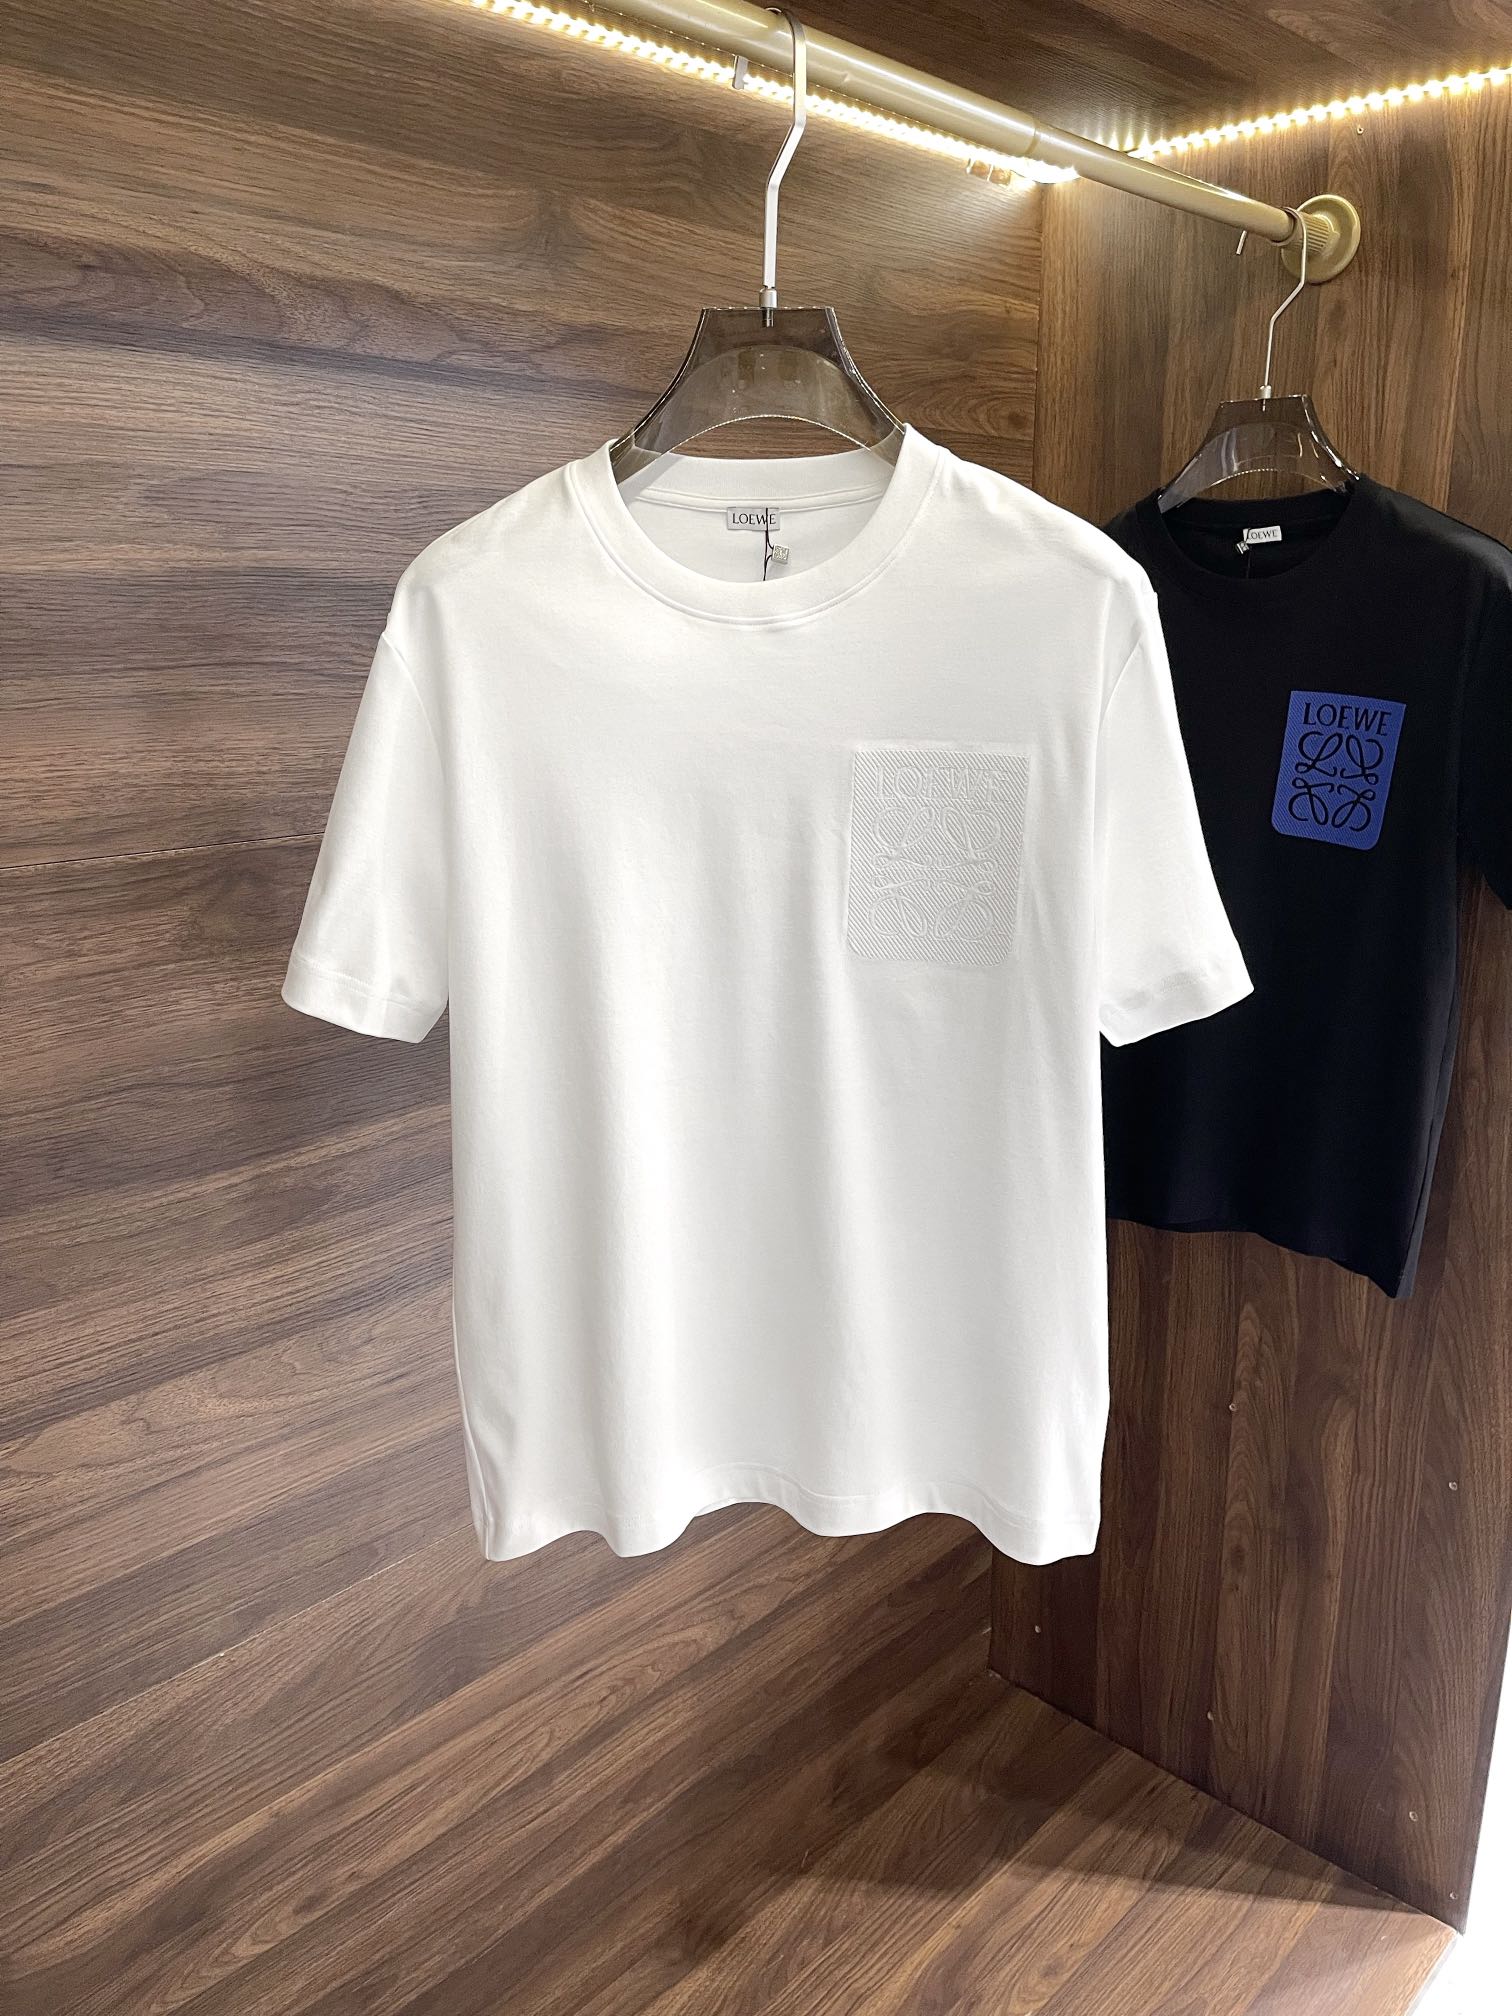 Loewe Clothing T-Shirt Black White Men Fashion Short Sleeve